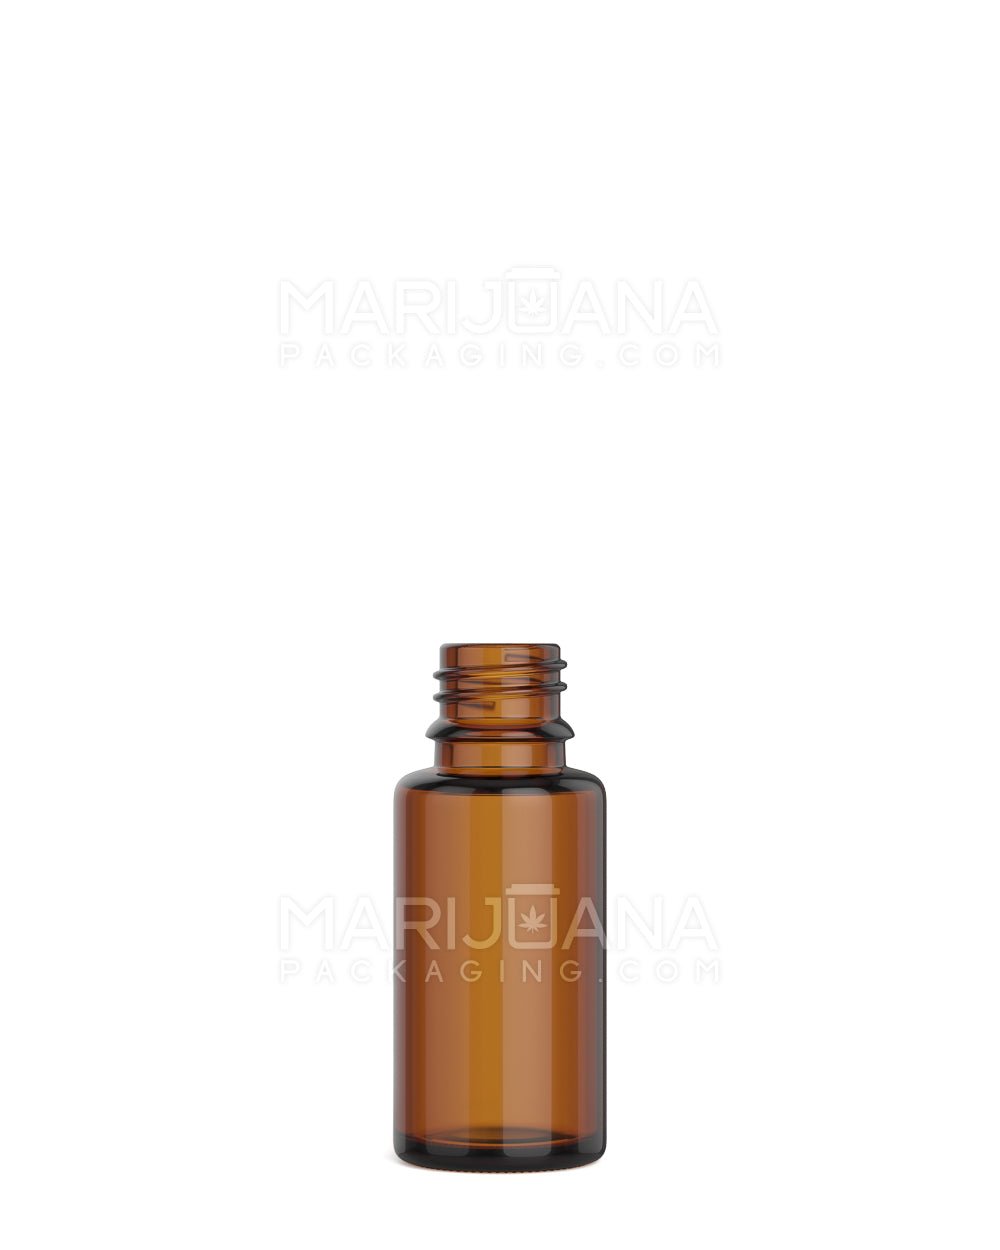 POLLEN GEAR | Sharp Shoulder Glass Tincture Dropper Bottles | 15mL - Amber - 252 Count - 1